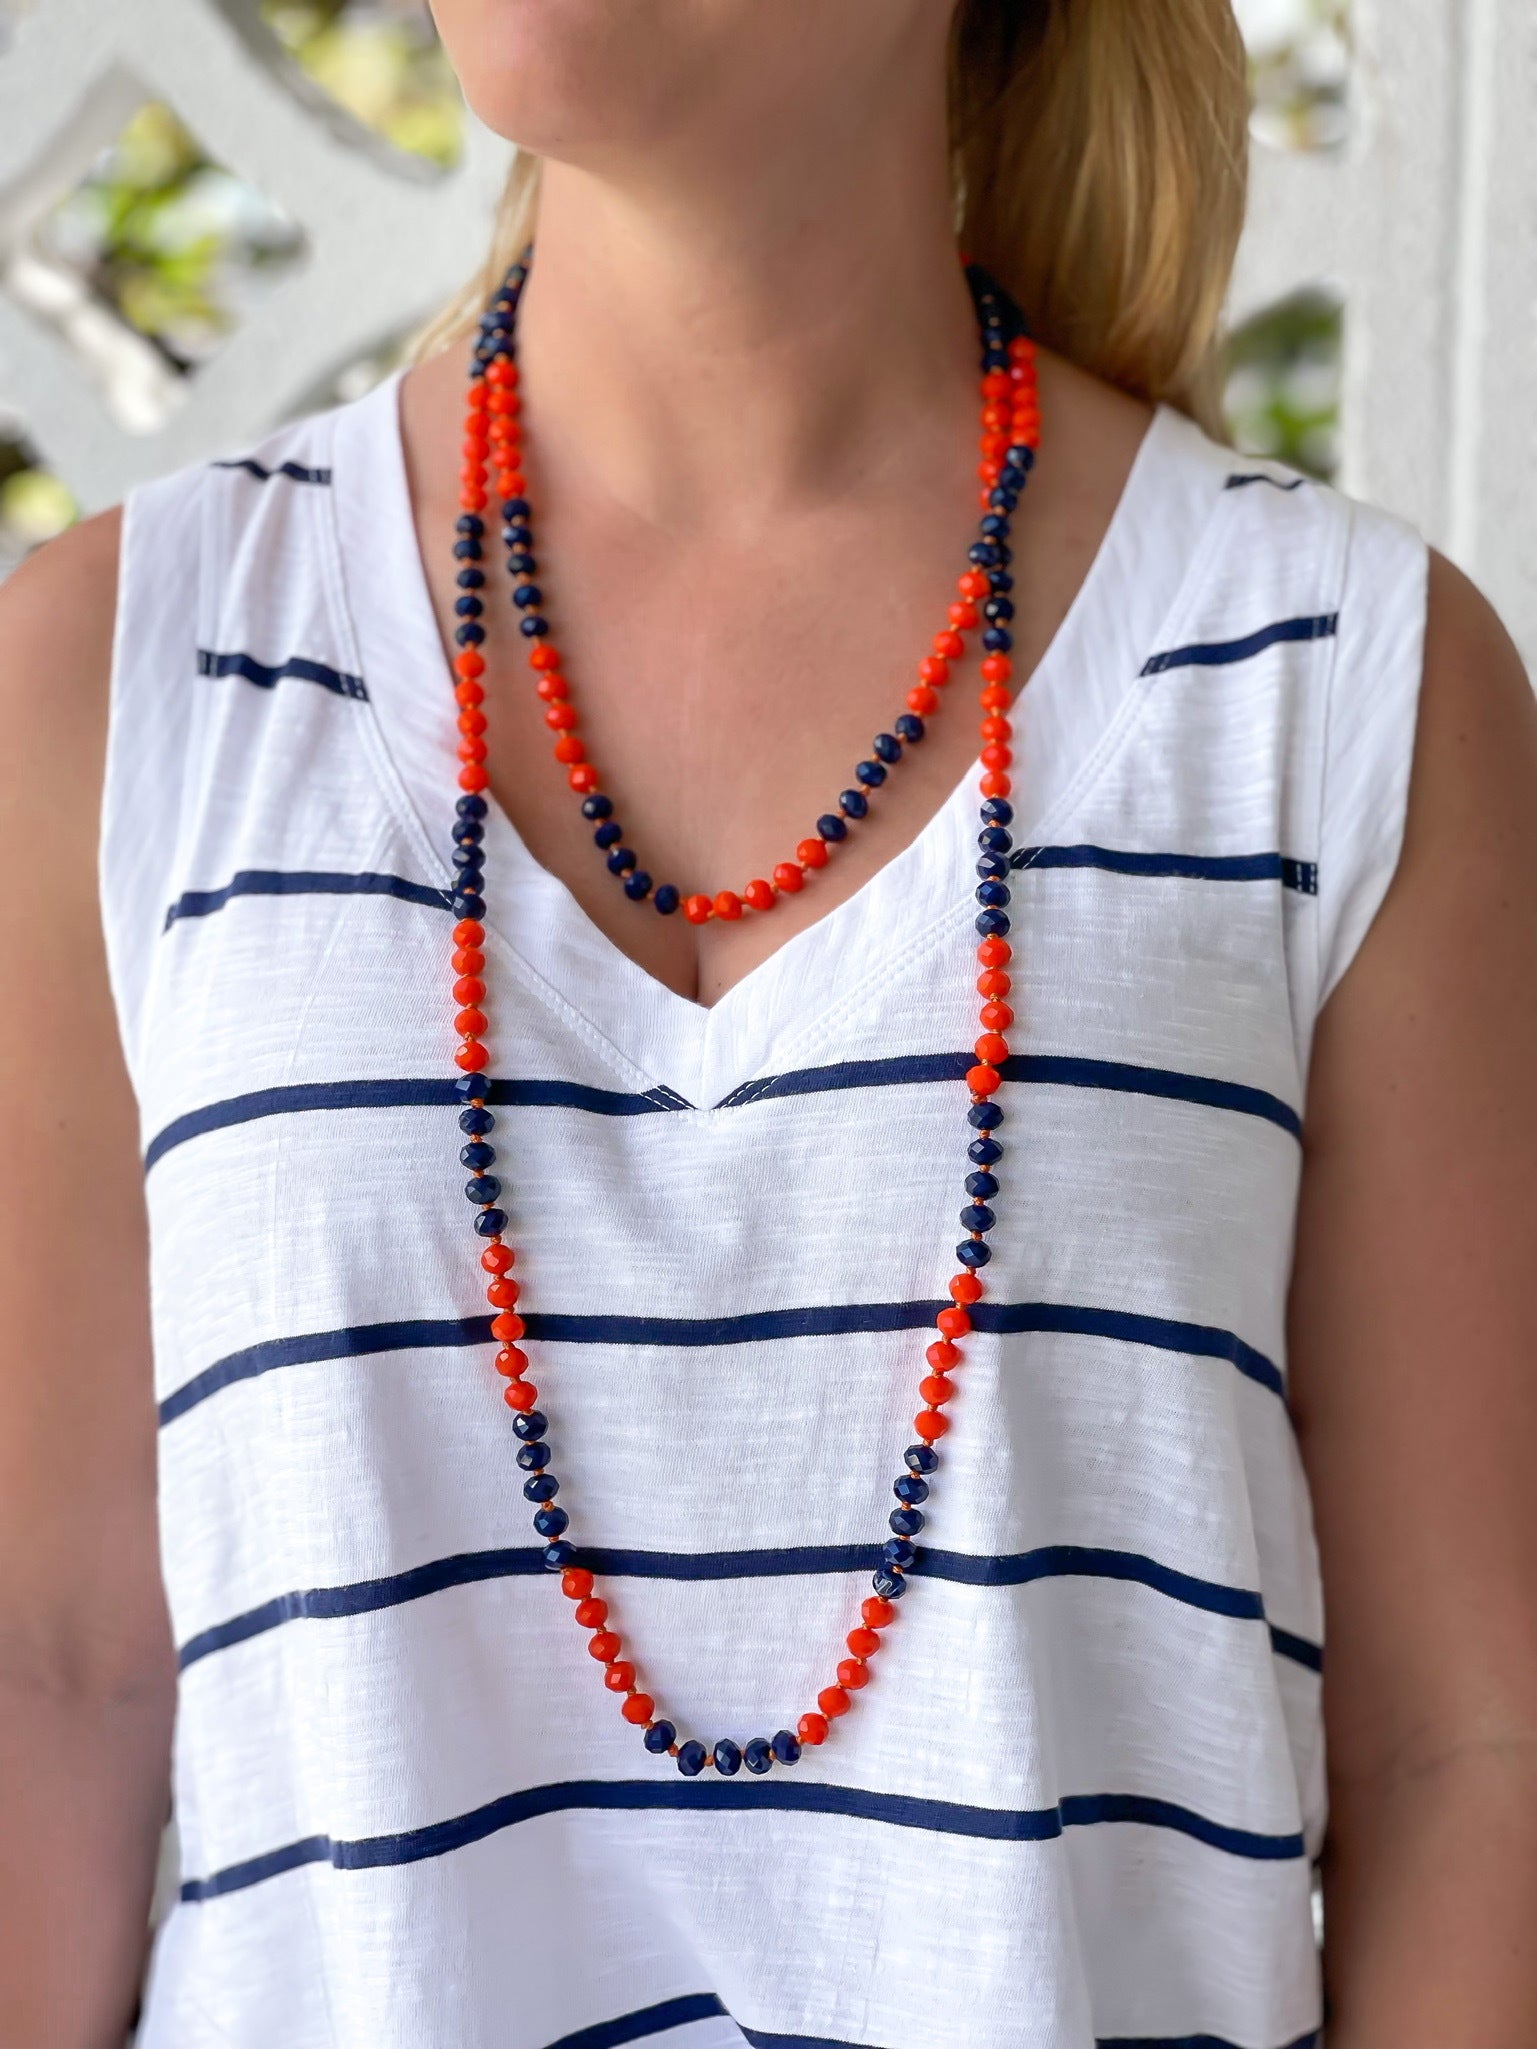 Endless Beaded Long Necklace - Orange & Navy Blue